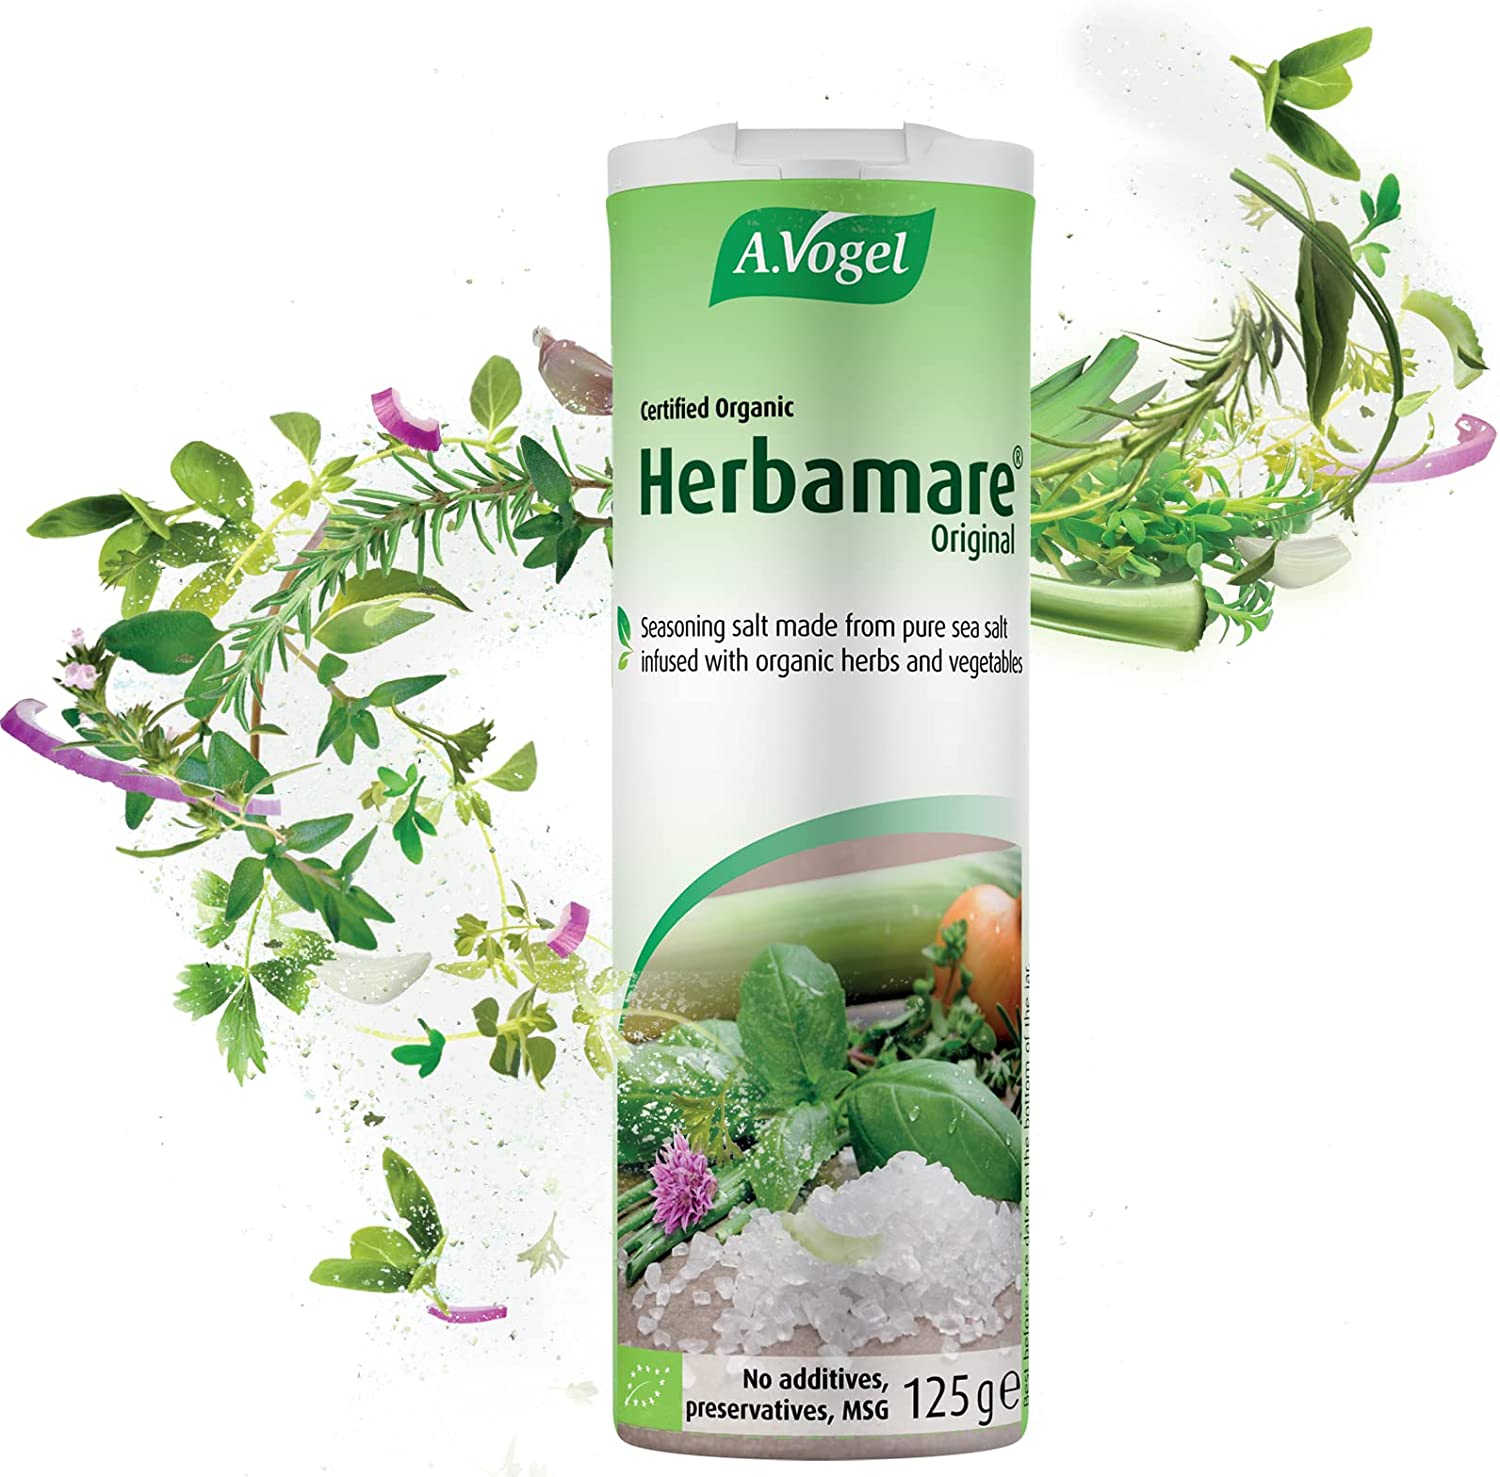 A Vogel Organic Herbamare Seasoning - Original - 8.8 oz